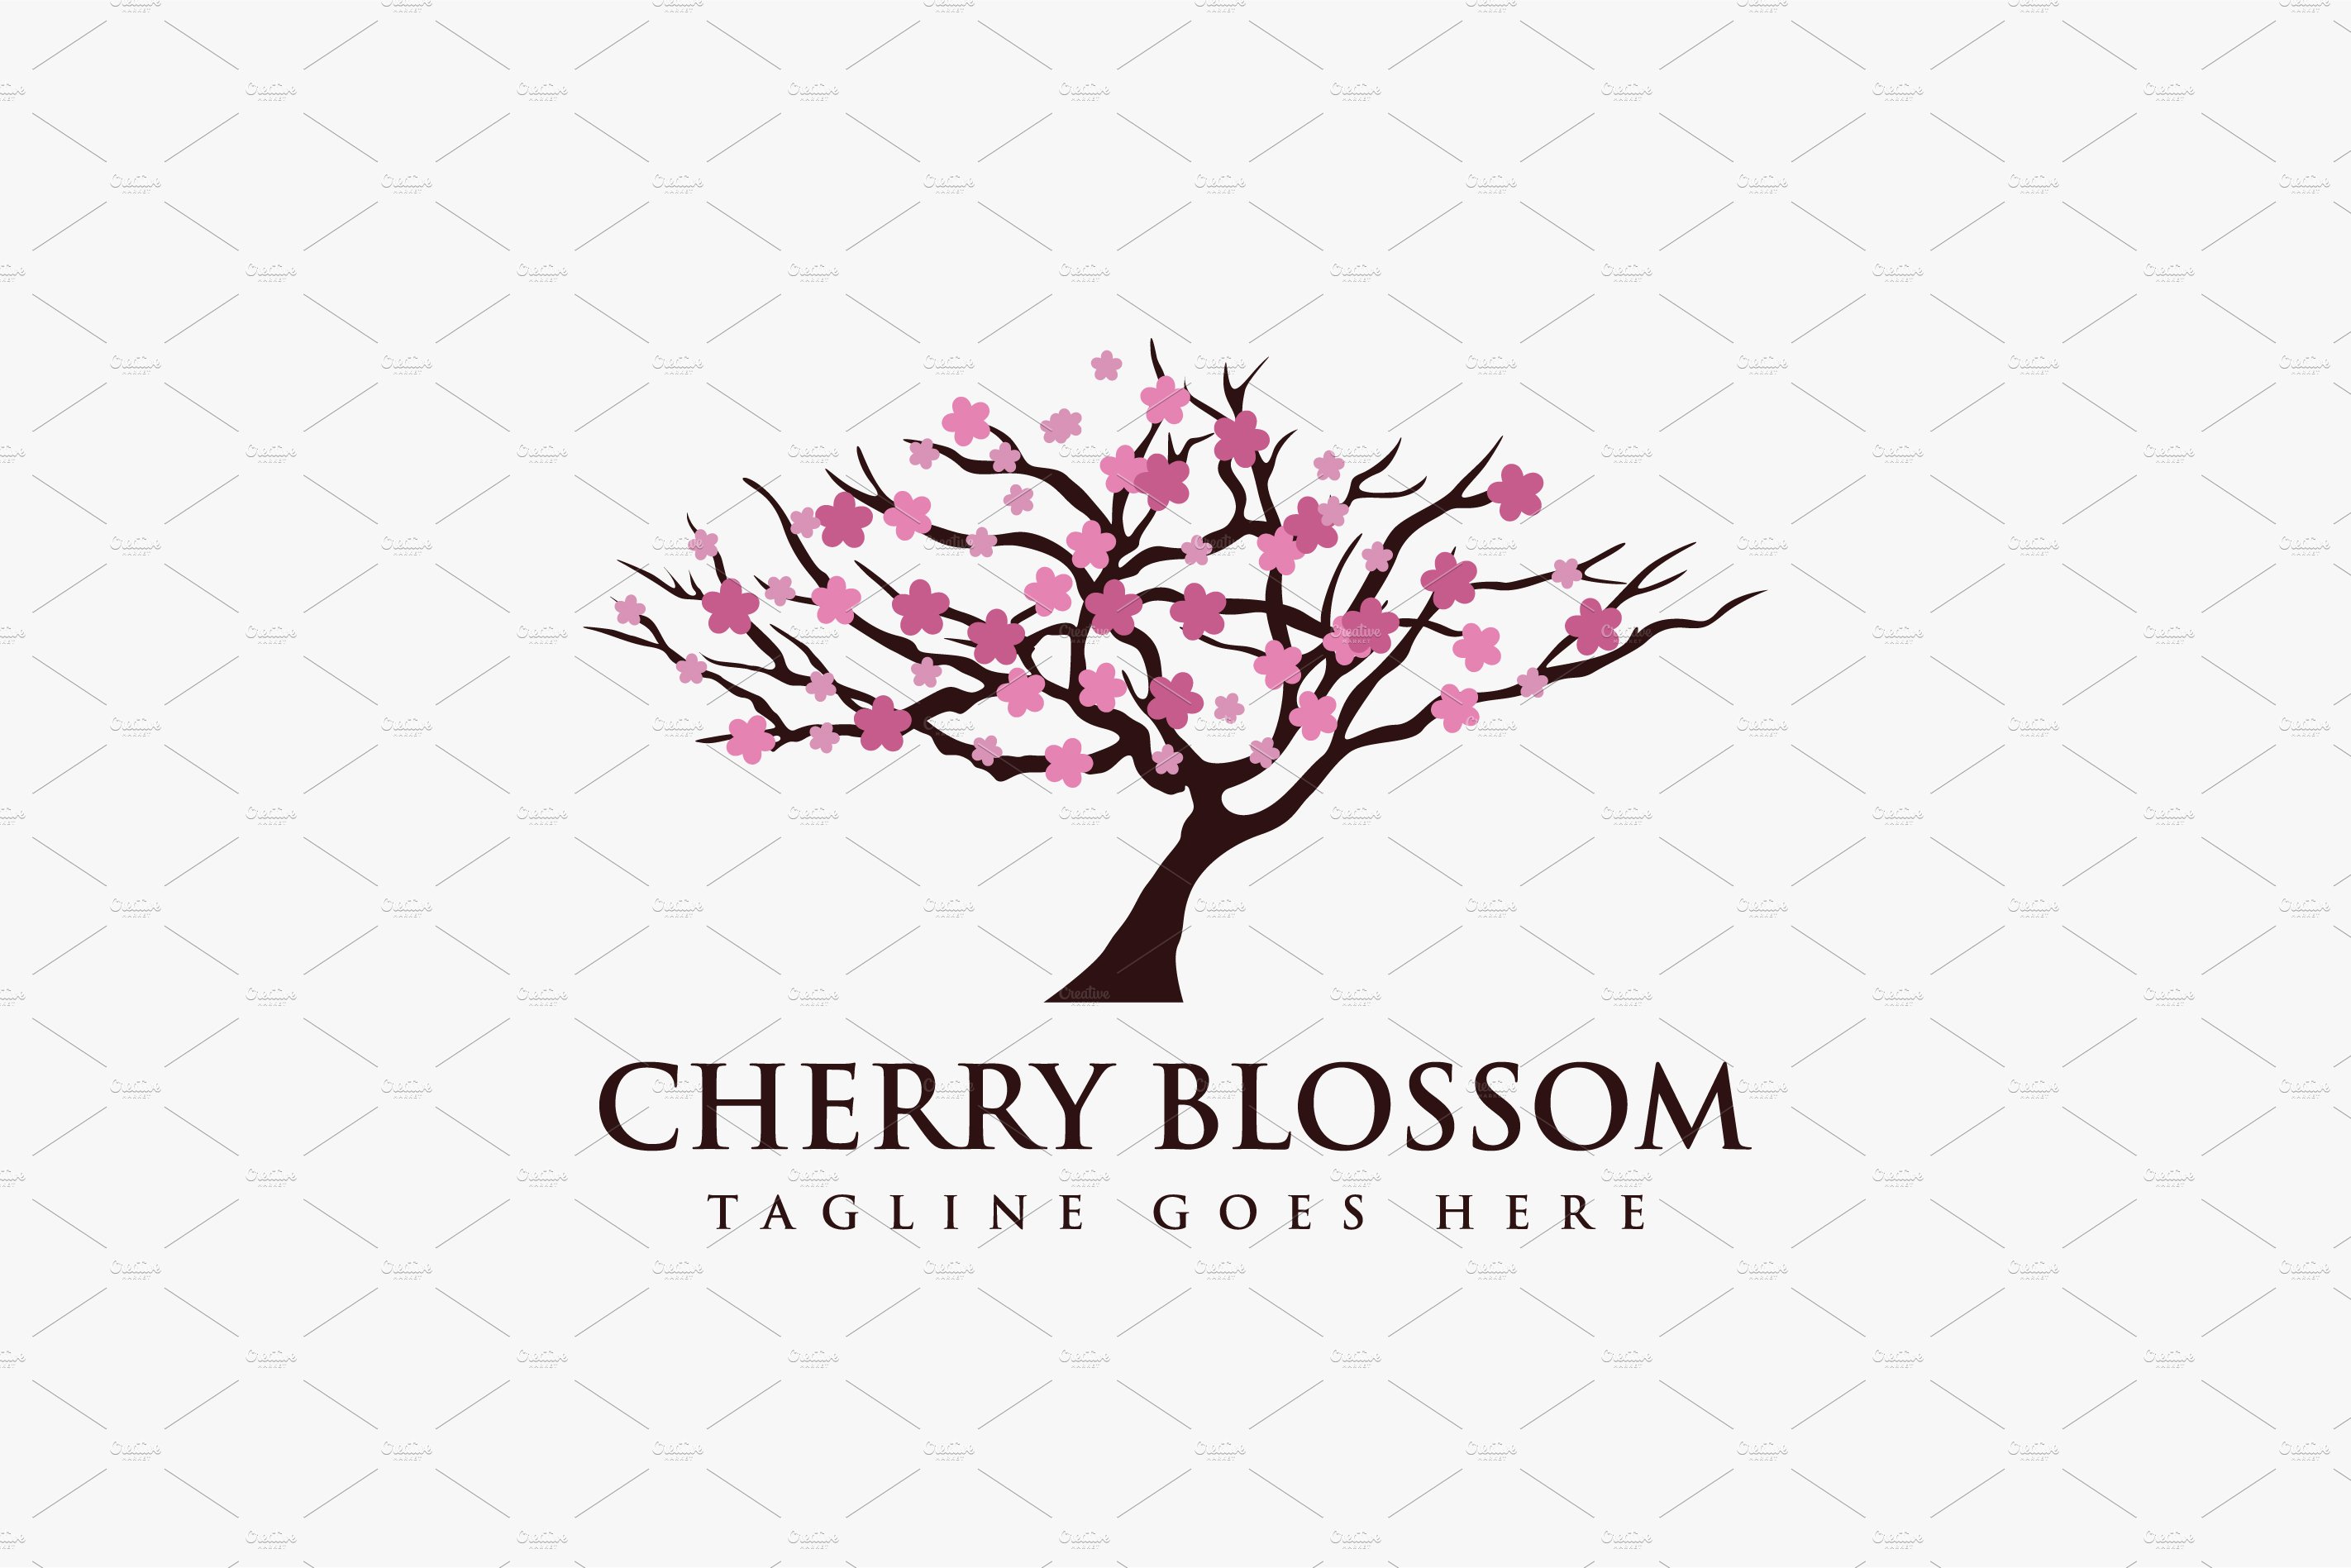 Design System - Cherry